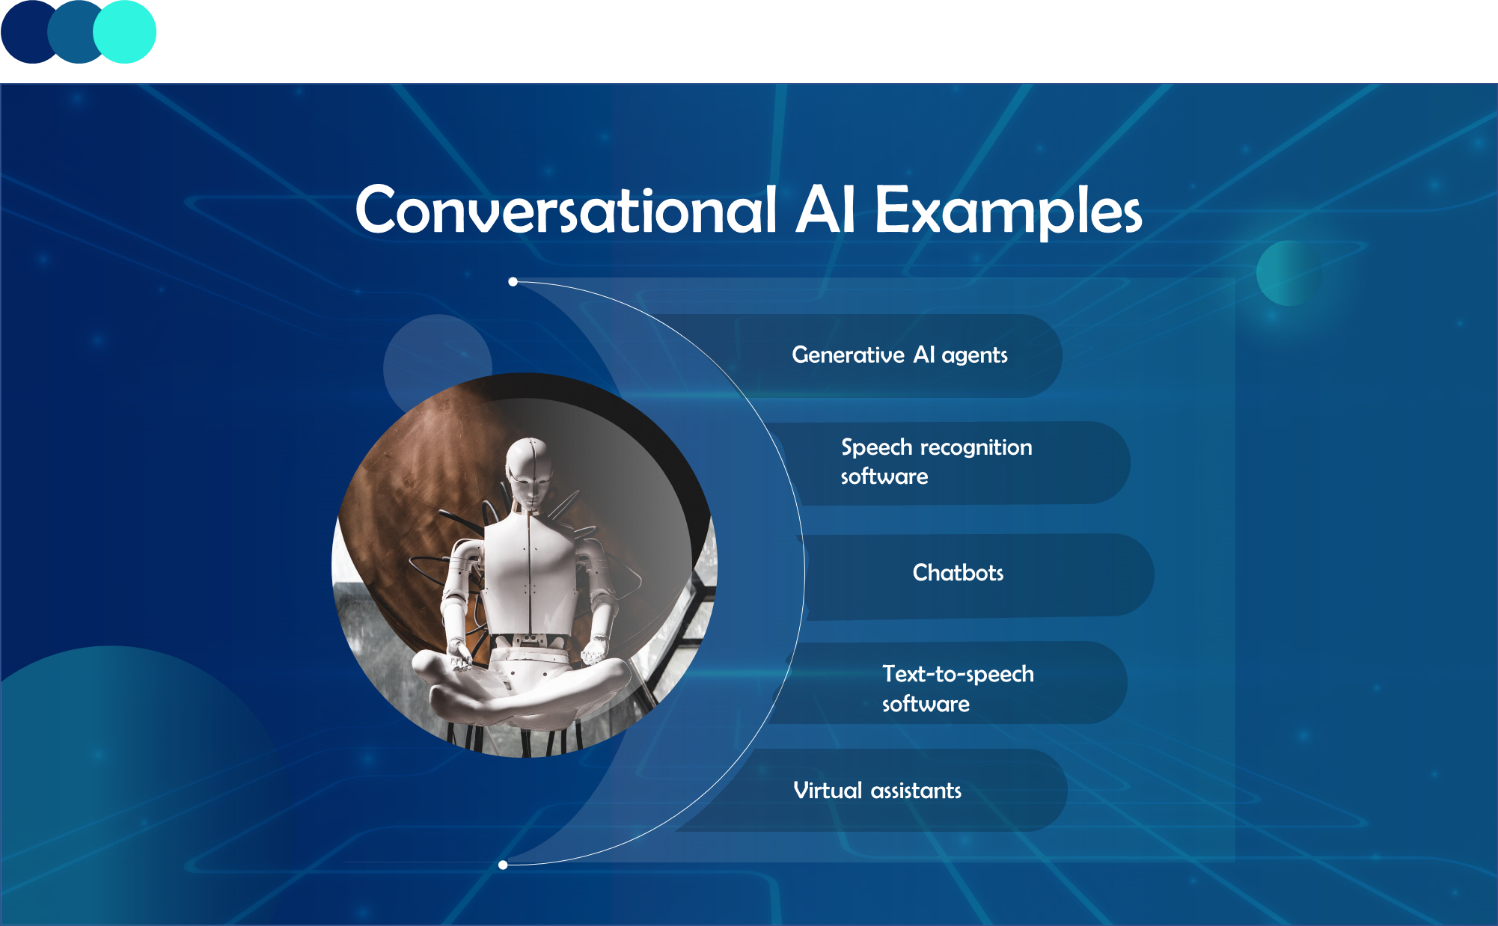 Conversational AI examples